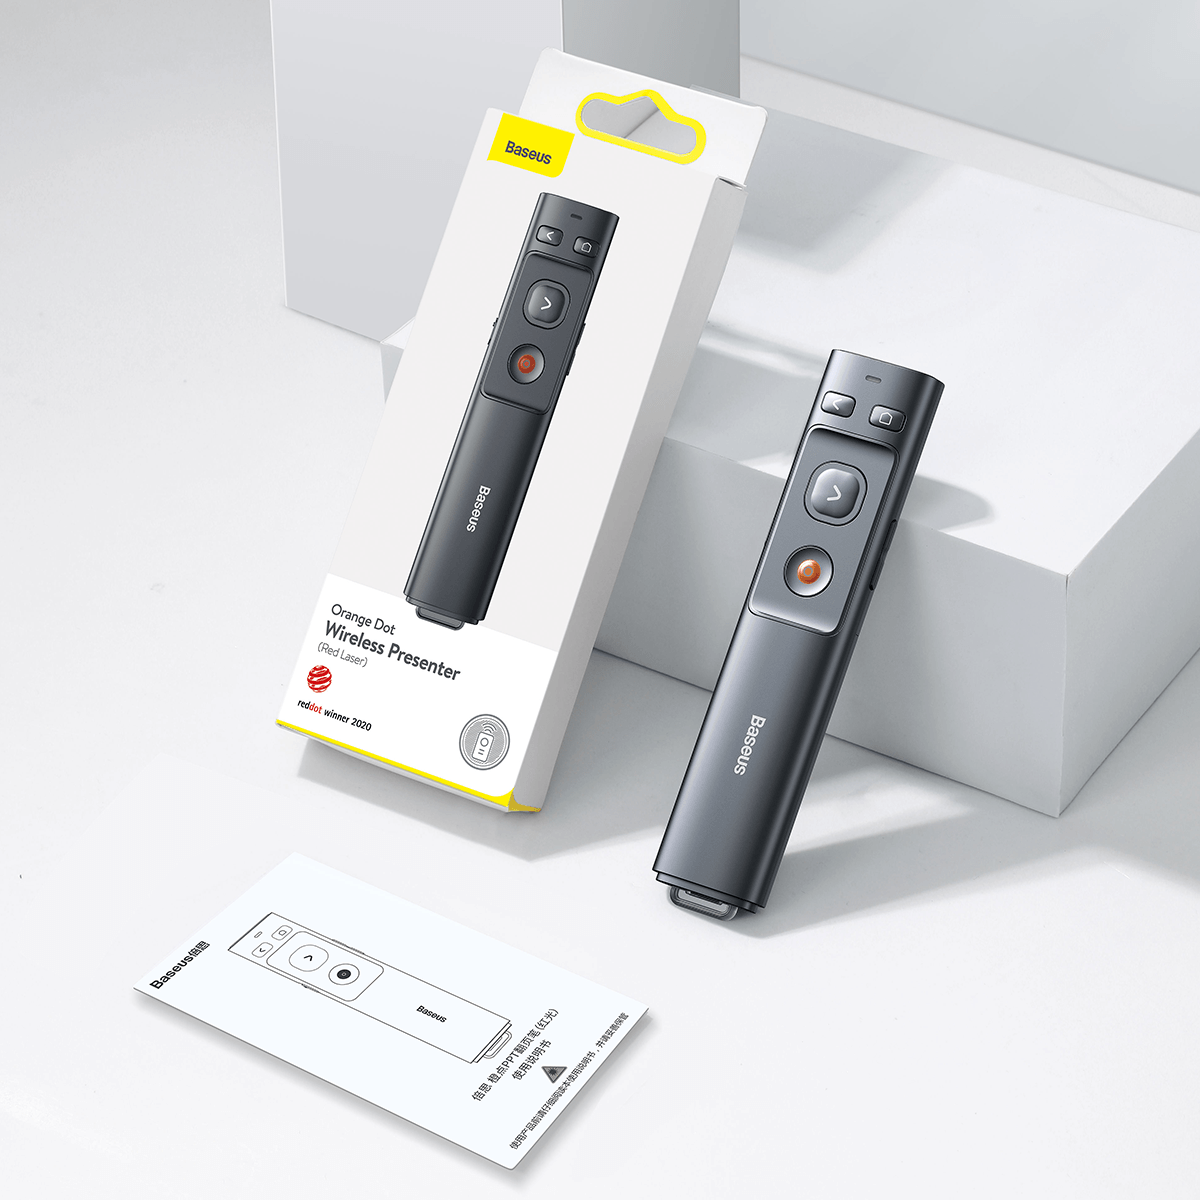 Baseus-24GHz-Presenter-Wireless-Remote-Control-Red-Laser-Pointer-Pen-for-Slide-Projector-Presentatio-1699176